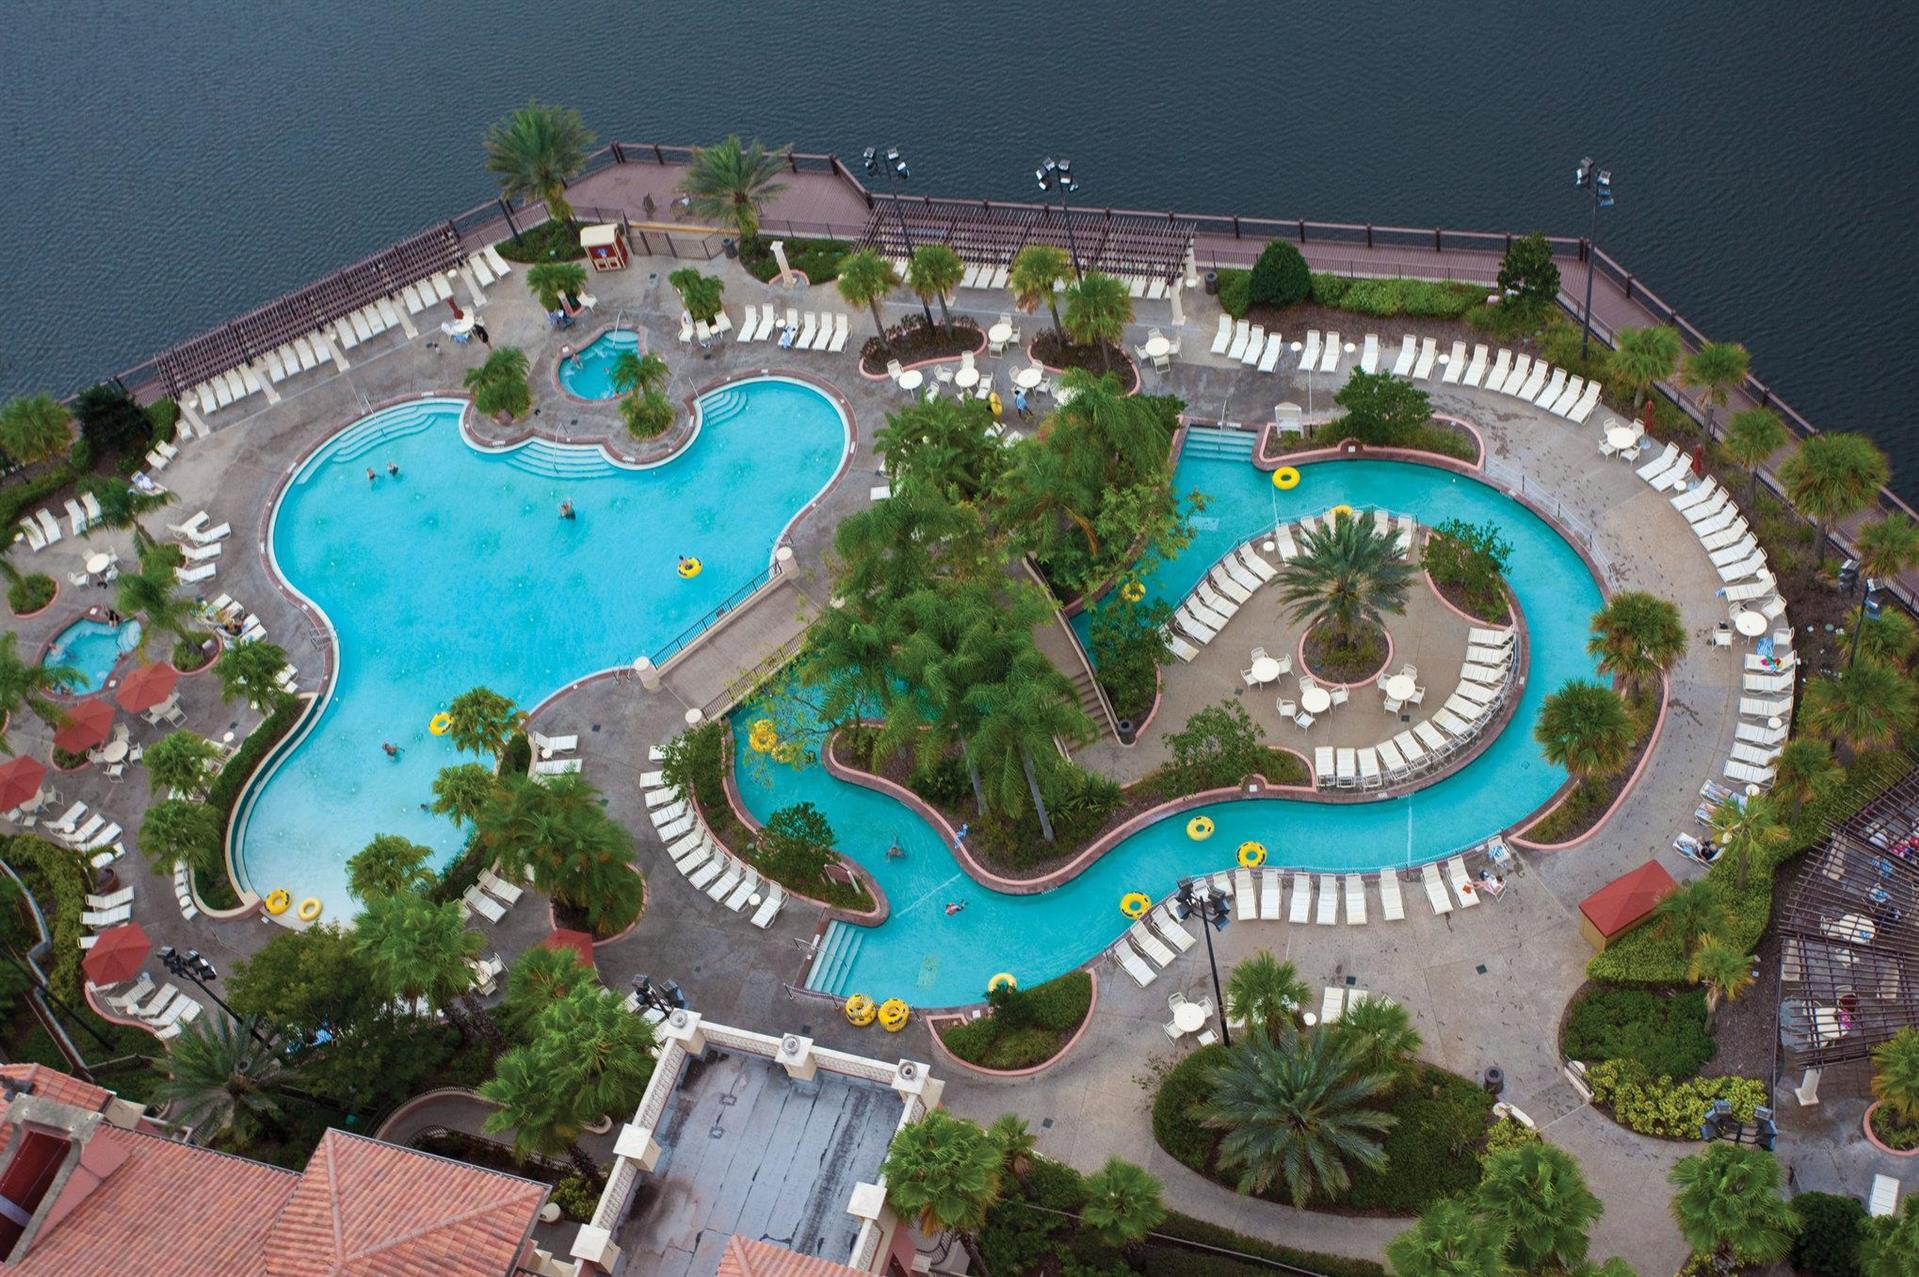 Wyndham Vacation Resorts - Bonnet Creek Resort in Lake Buena Vista, FL